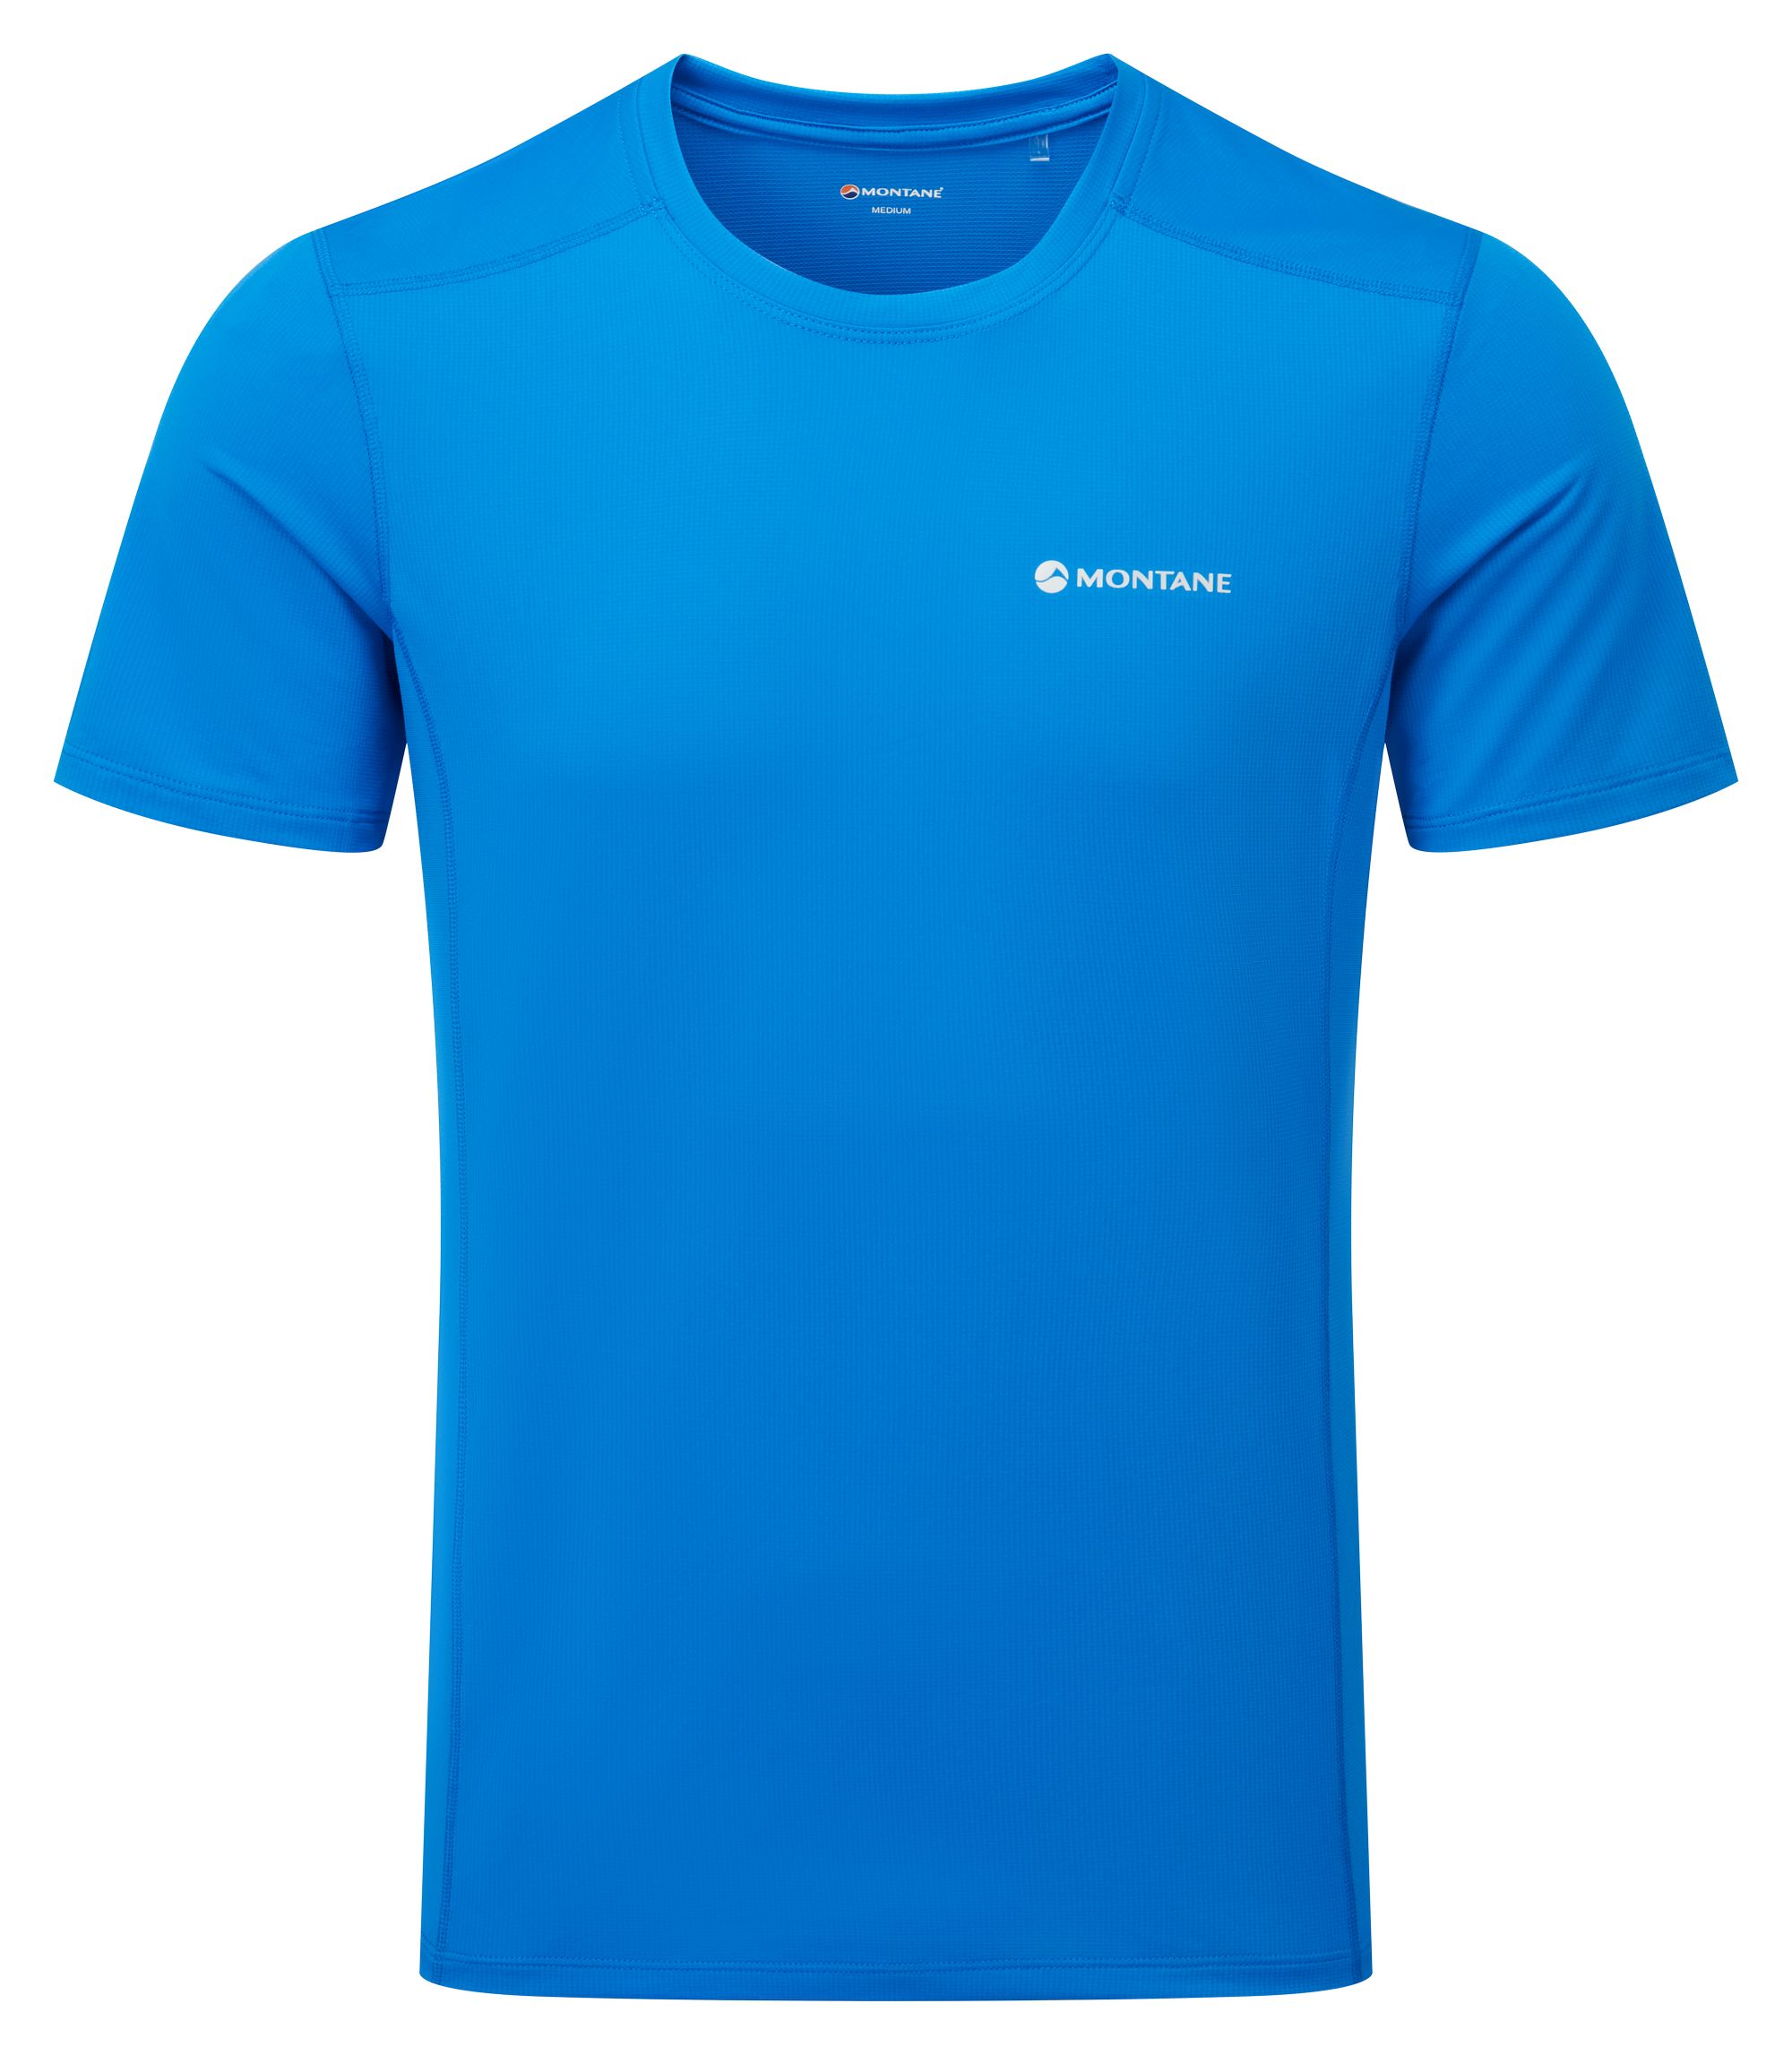 Montane DART LITE T-SHIRT-ELECTRIC BLUE-XL pánské tričko modré